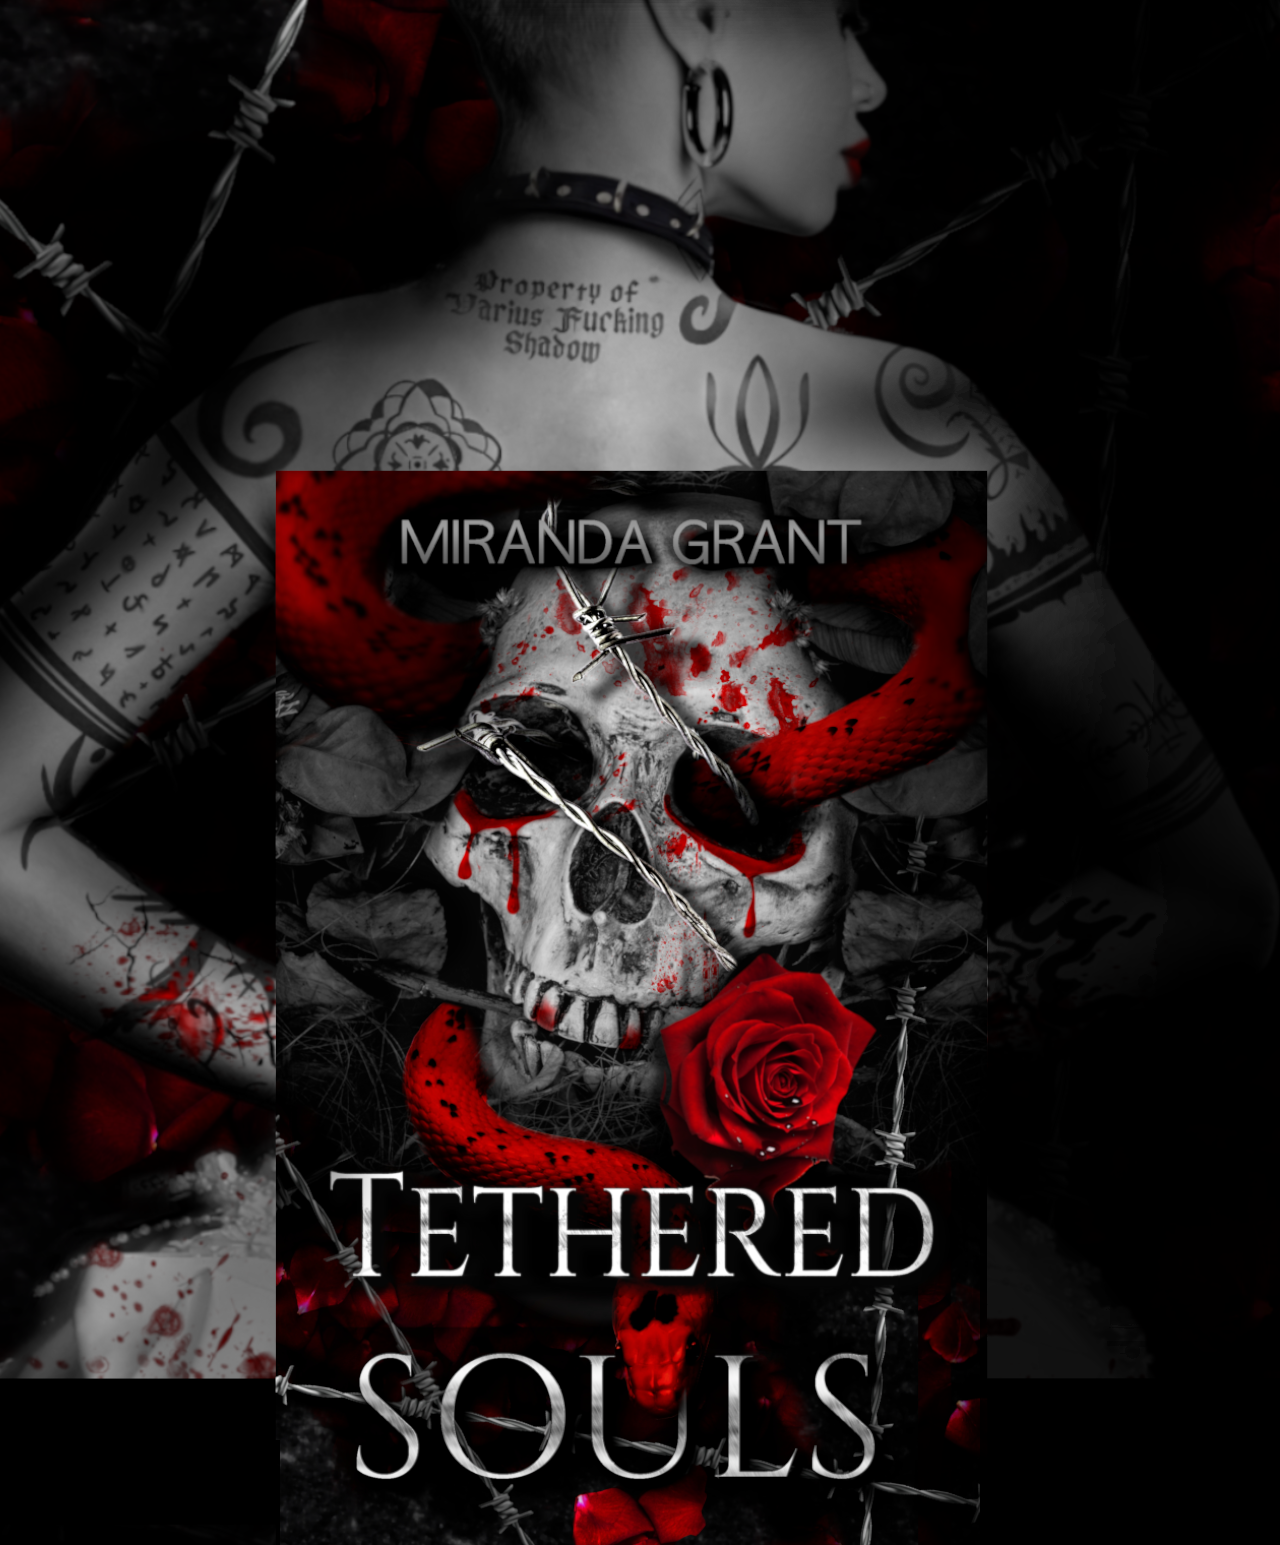 Tethered Souls by Miranda Grant